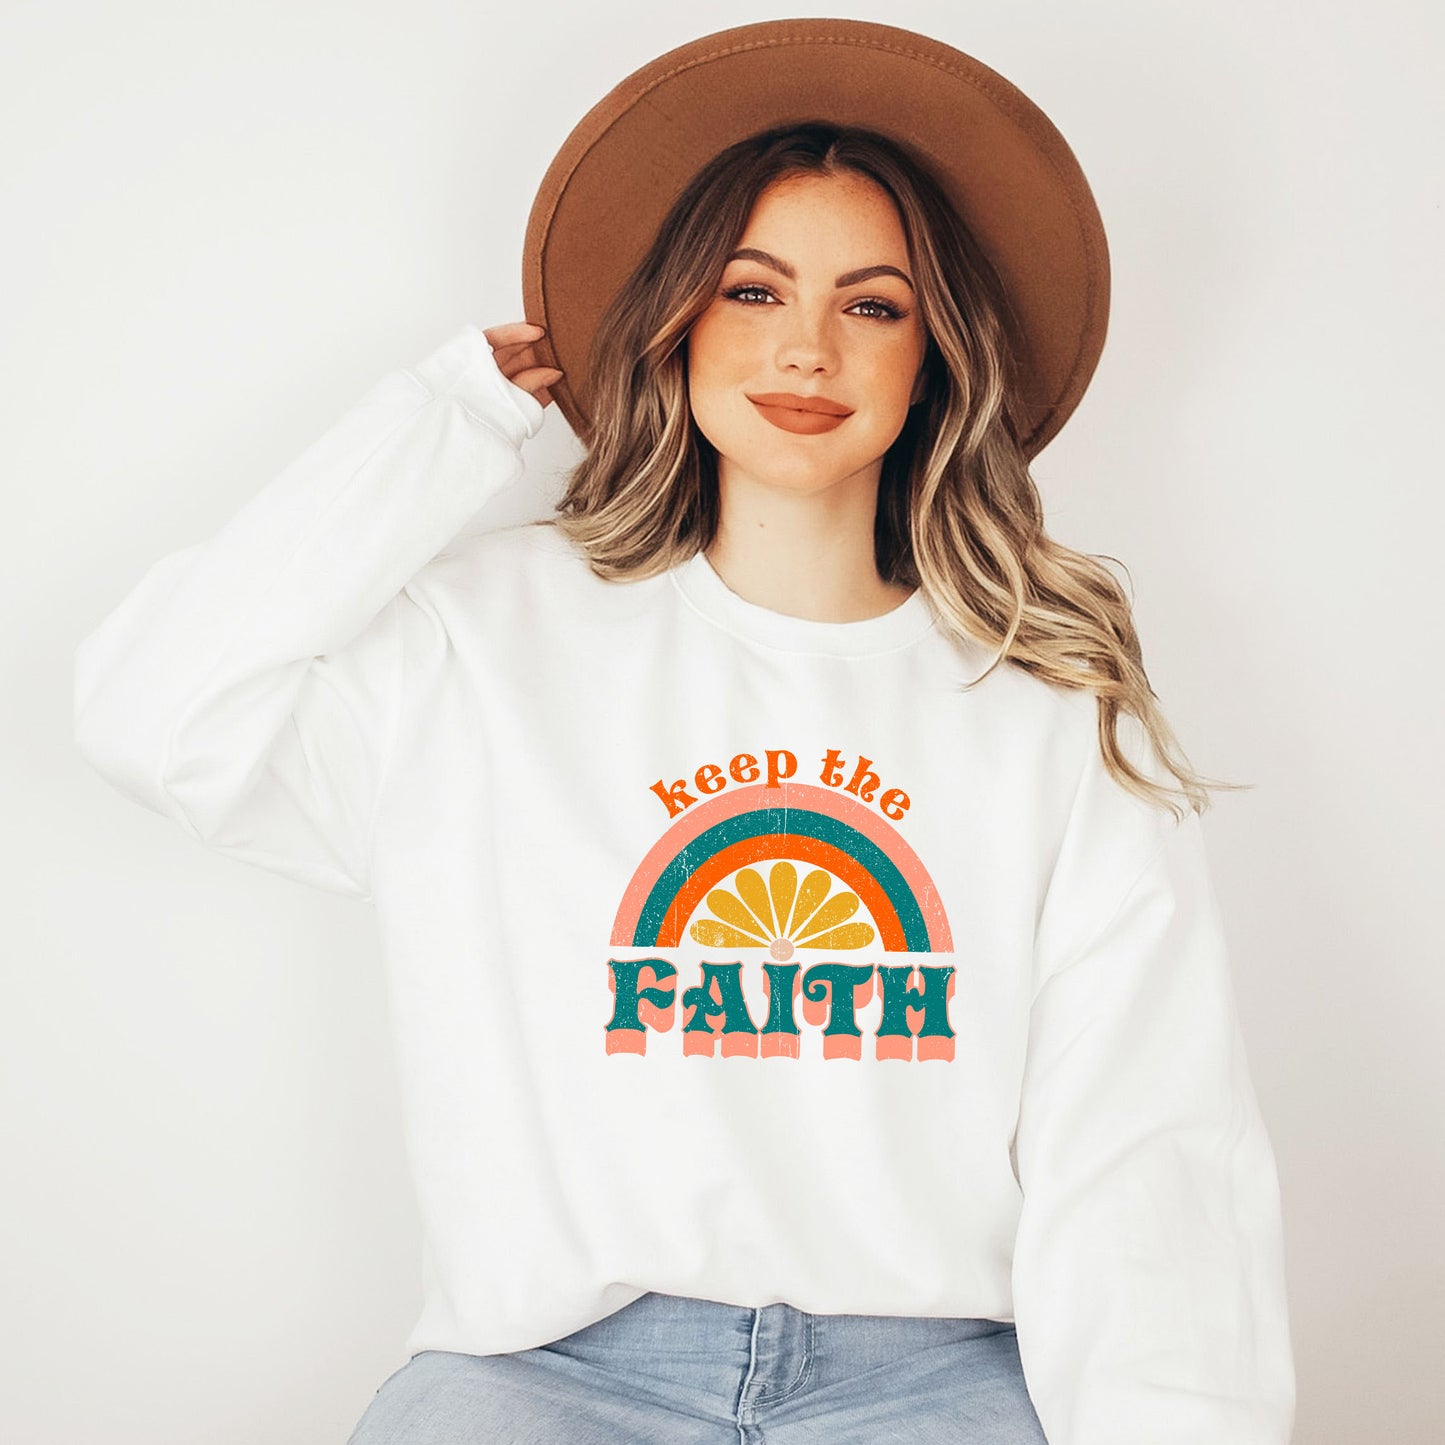 Keep The Faith | Sweatshirt